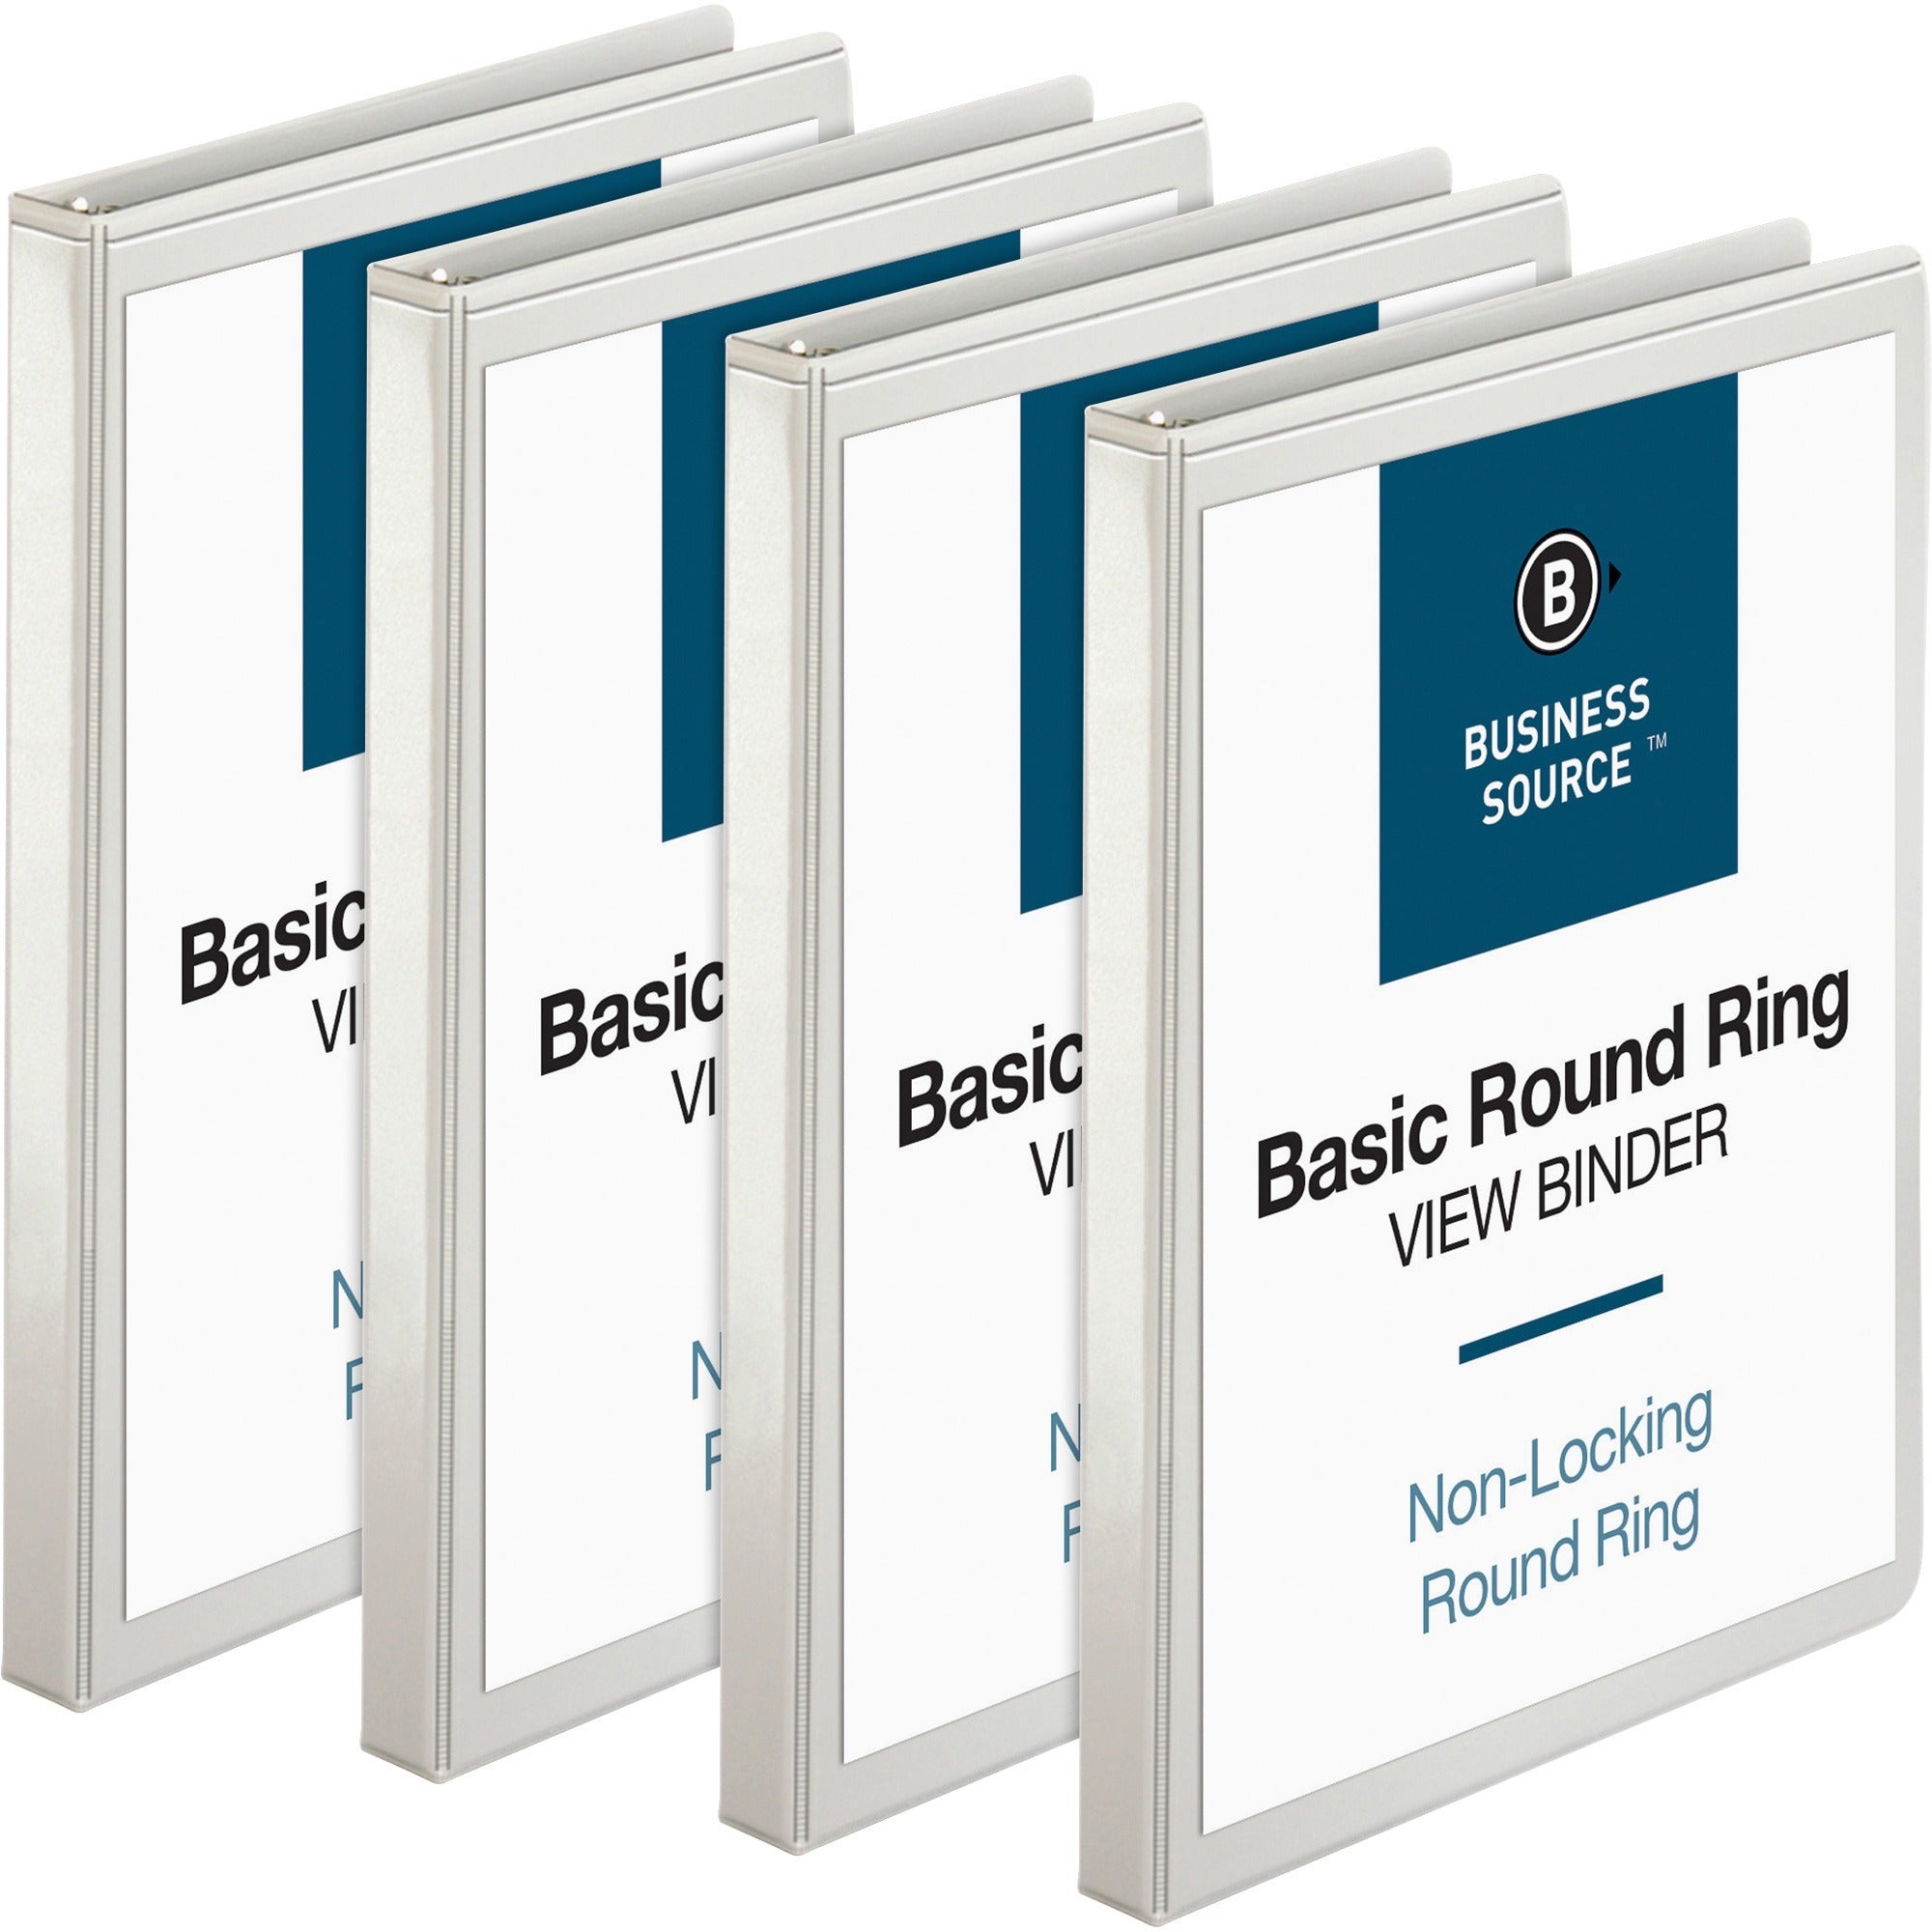 business-source-round-ring-view-binder_bsn09951bd - 1